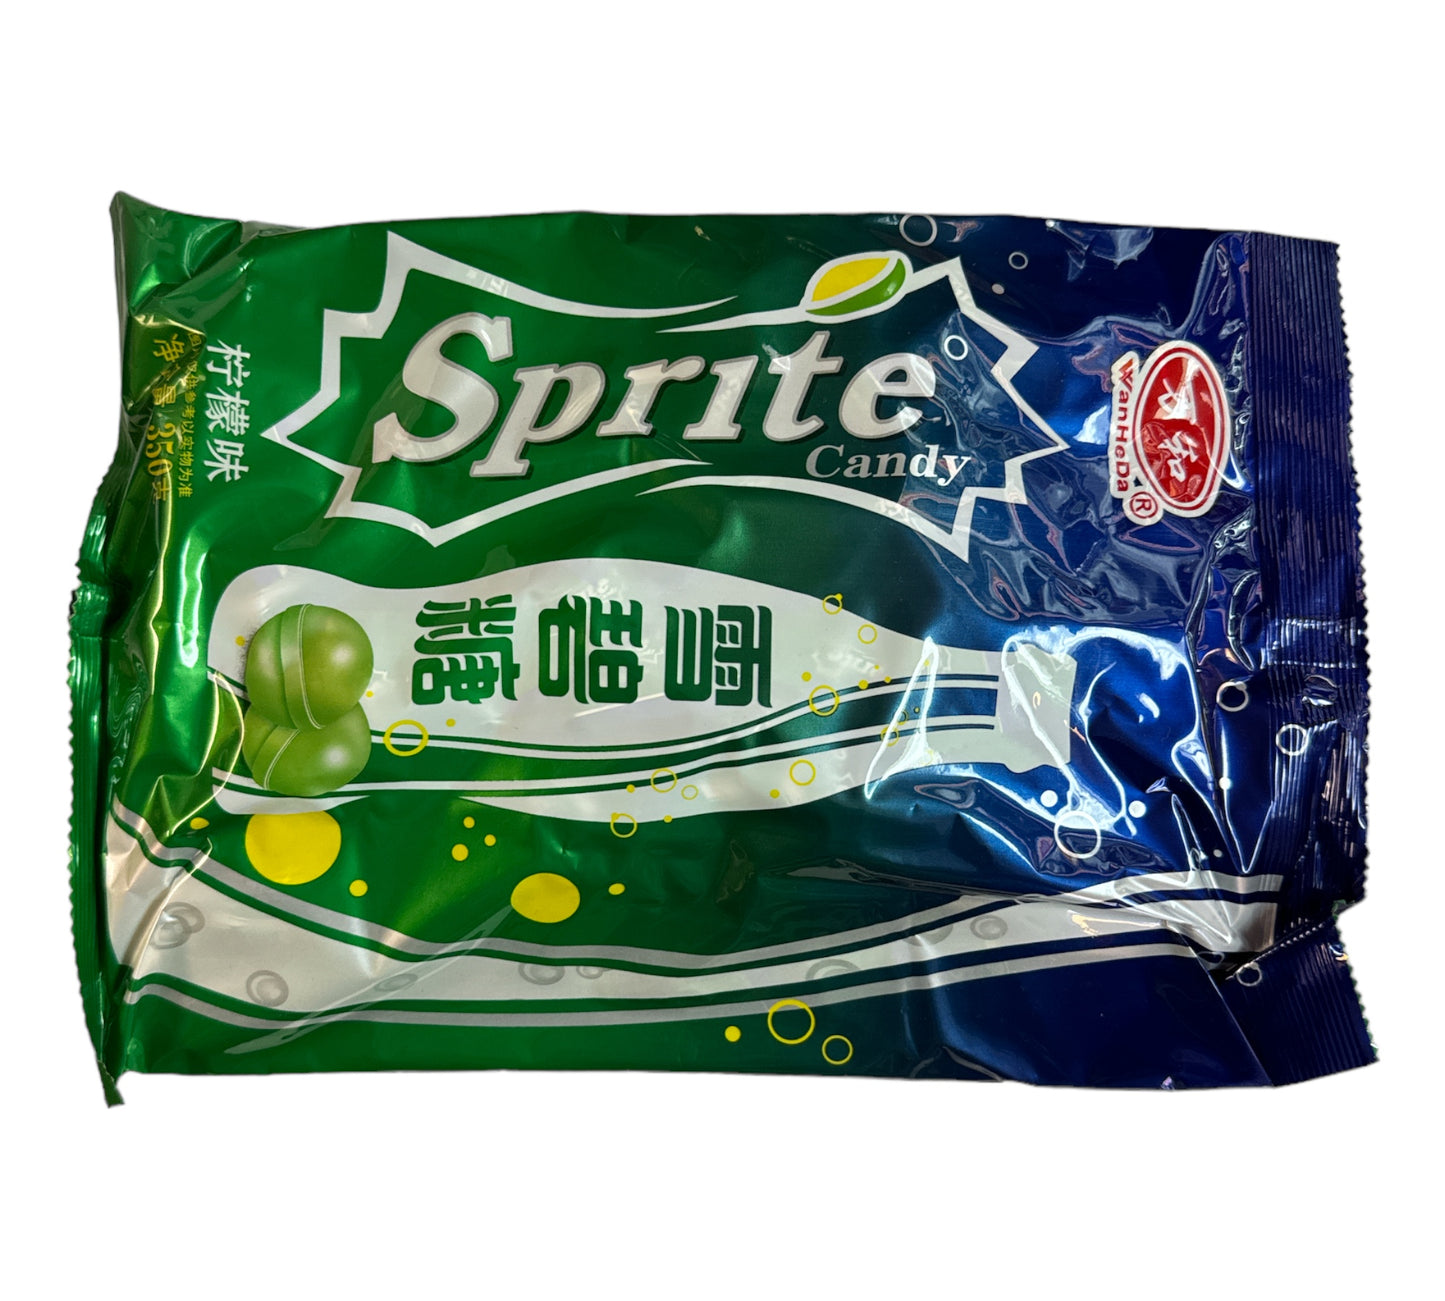 Sprite Candy (China)